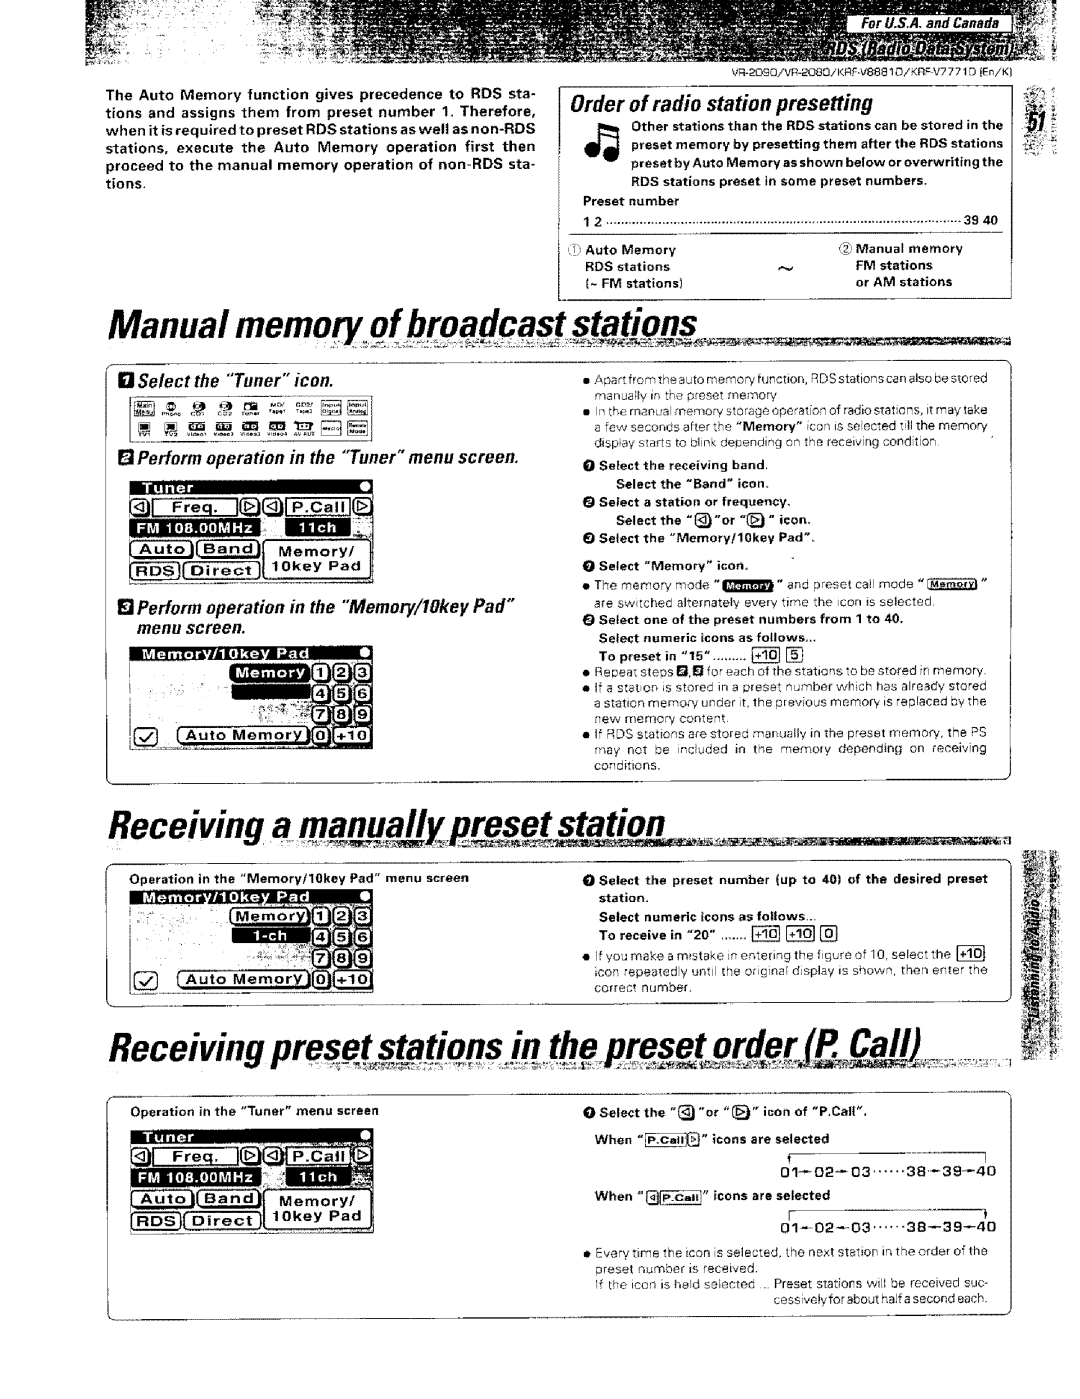 Kenwood KRF-VBB81 D, VR-2000 Manual memo pf broa caststation, Receiving a, Order of radio station presetting 